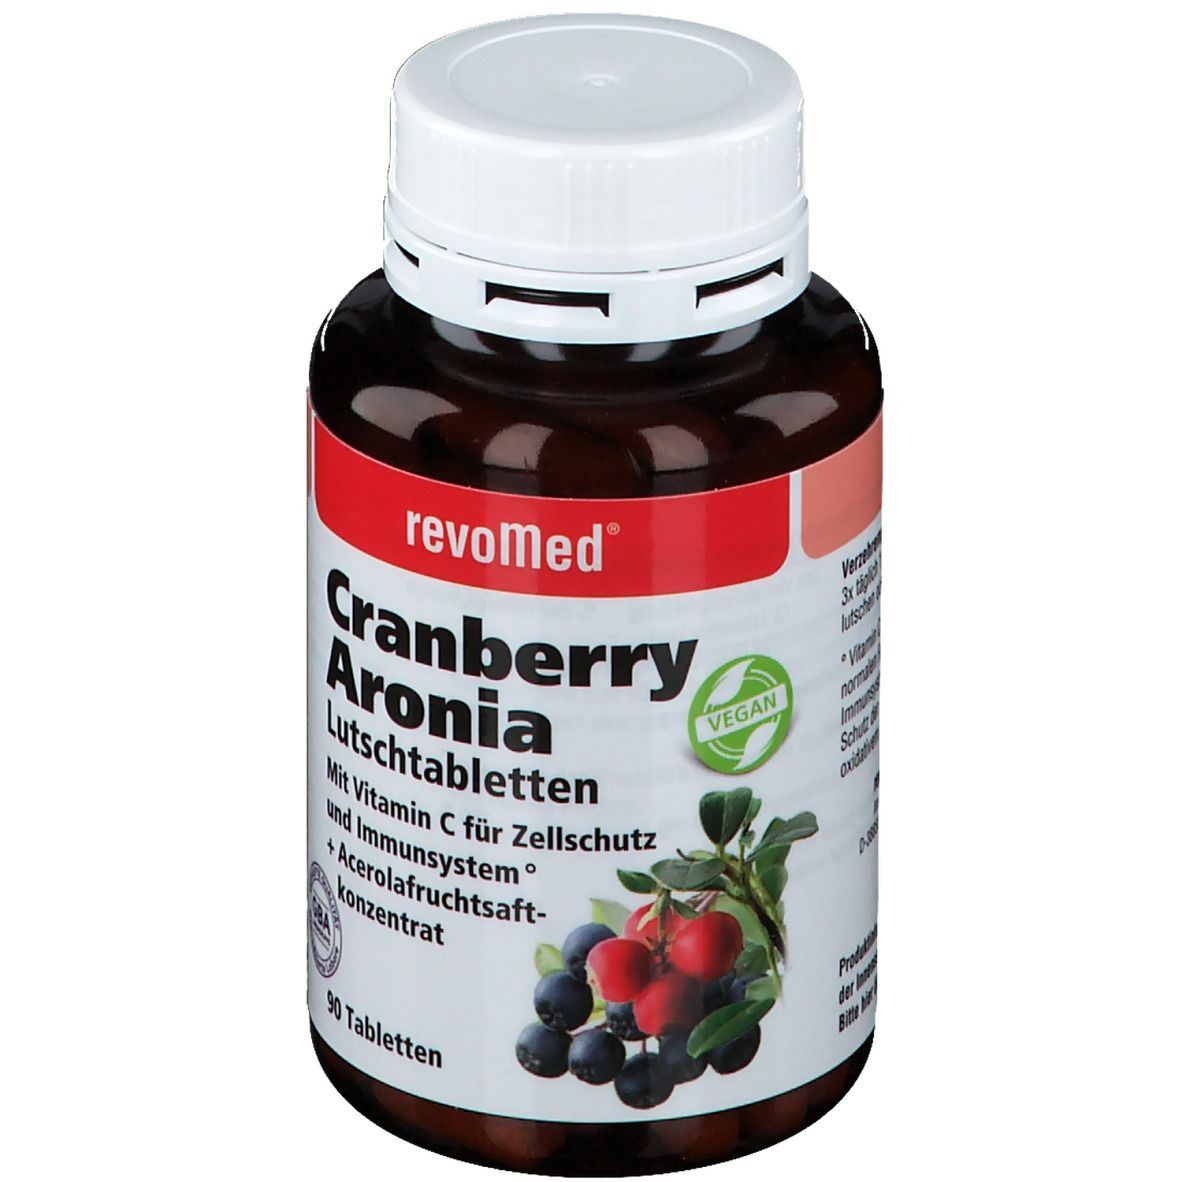 revoMed Cranberry Aronia mit Acerola